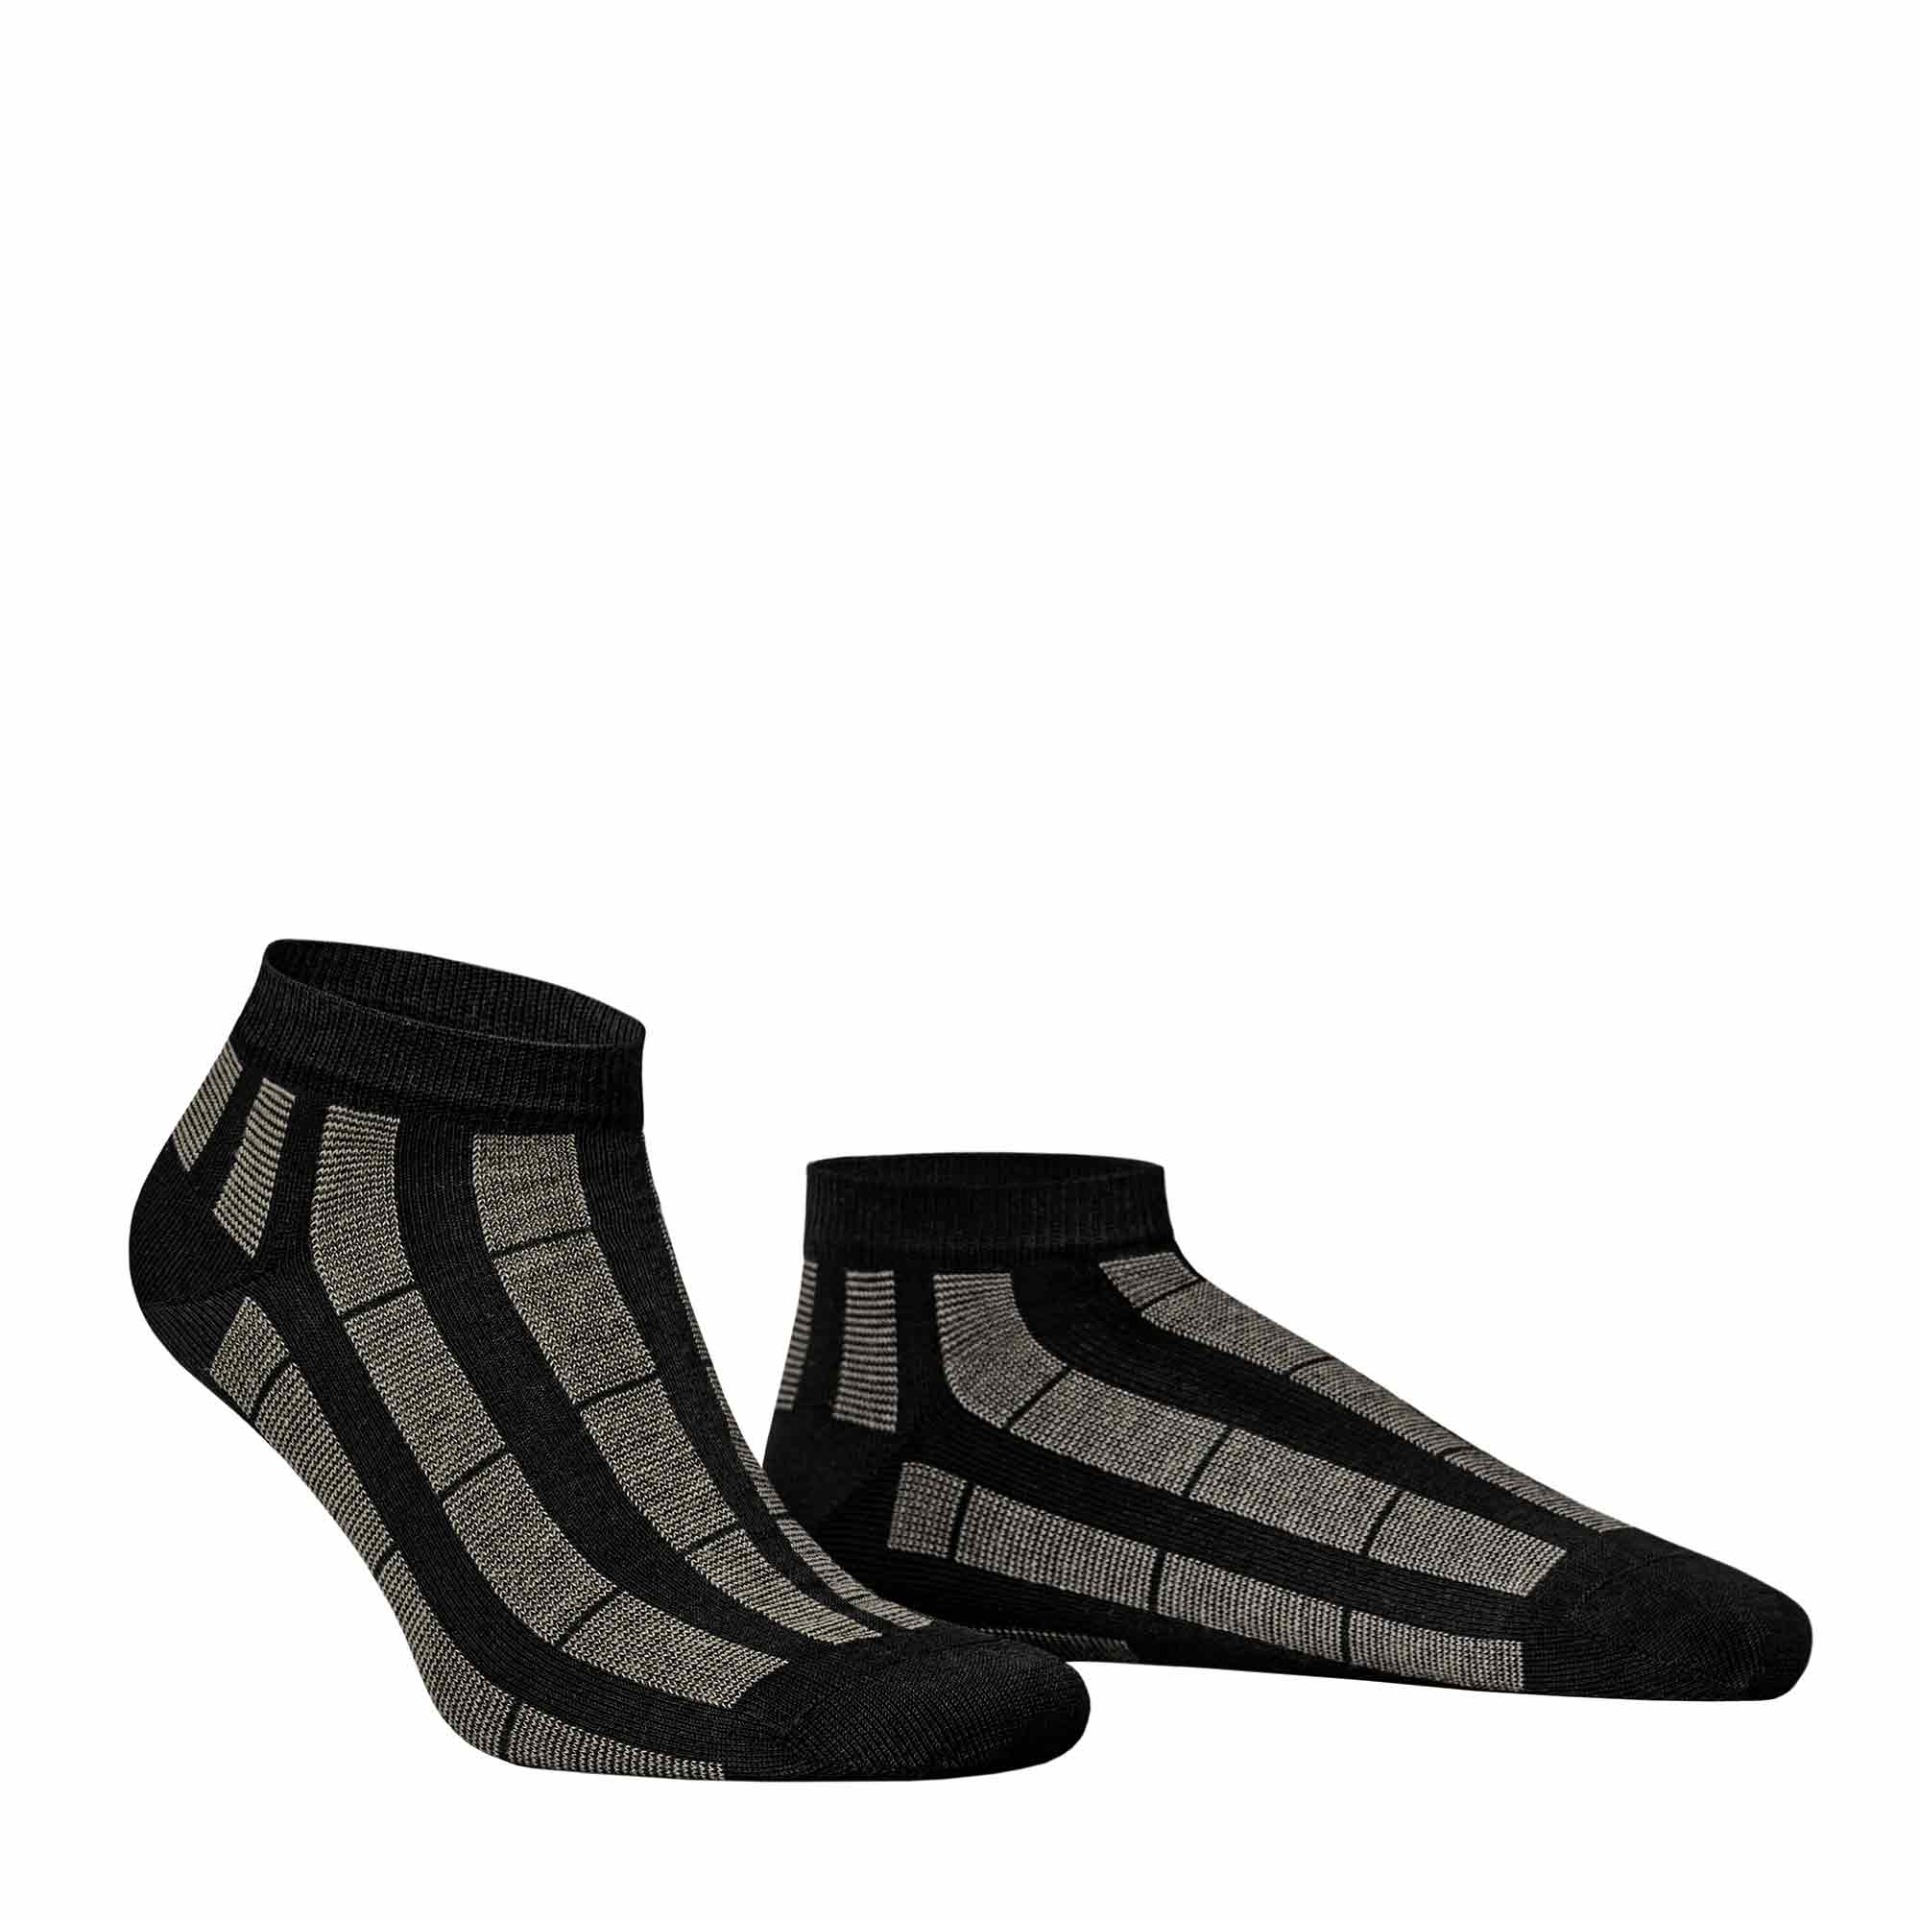 HUDSON Herren PIN -  43/46 - Sneaker Socken mit Streifen-Muster - Black (Schwarz)